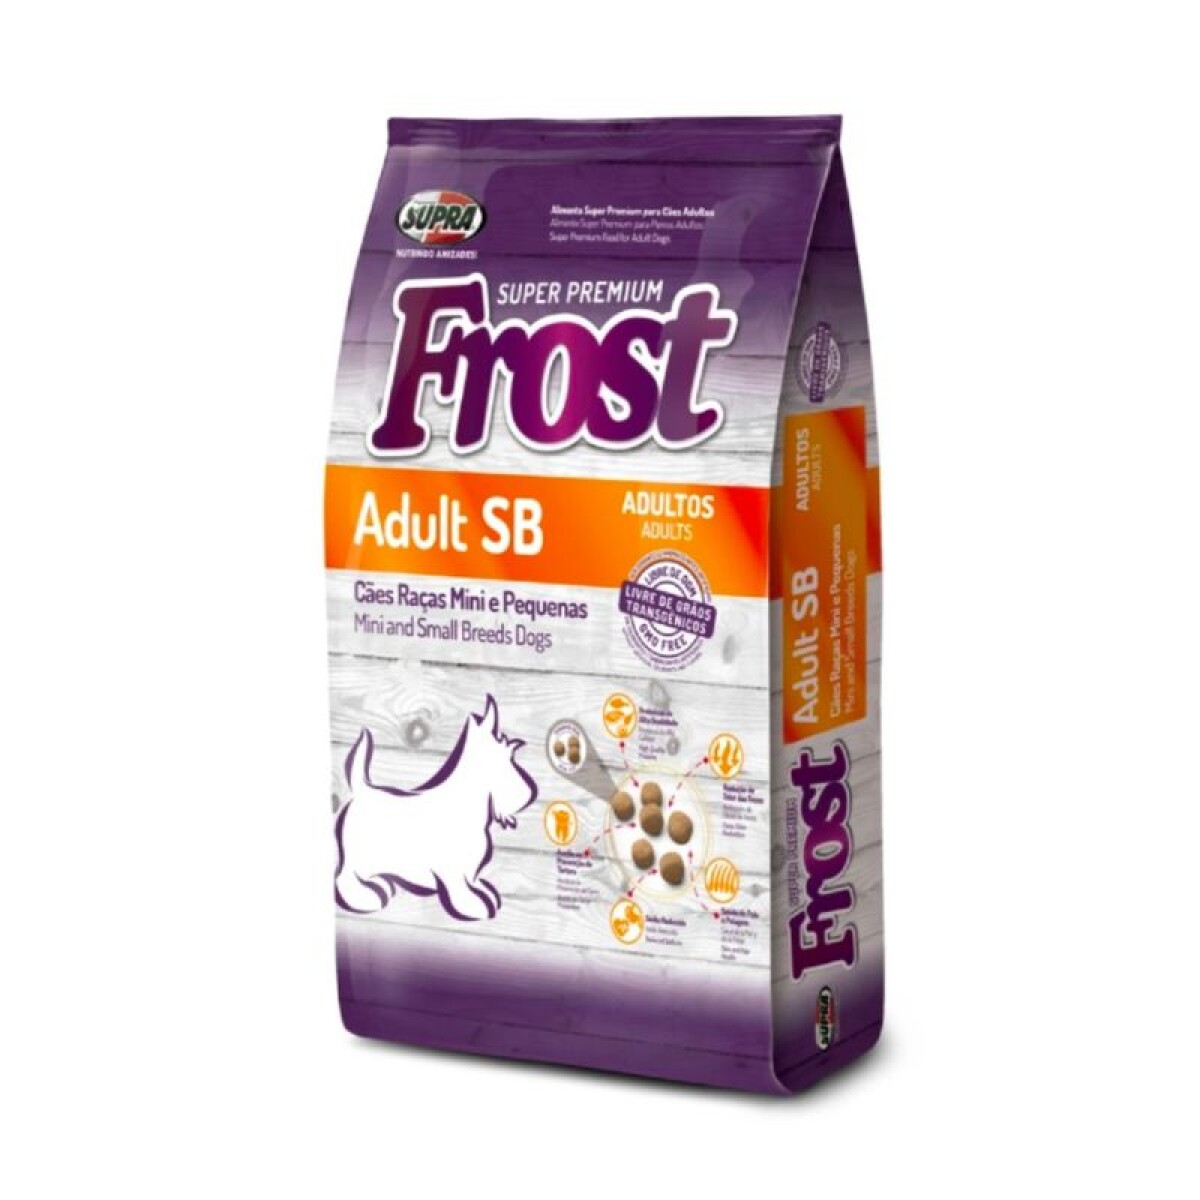 FROST ADULT SB 10KG - Frost Adult Sb 10kg 